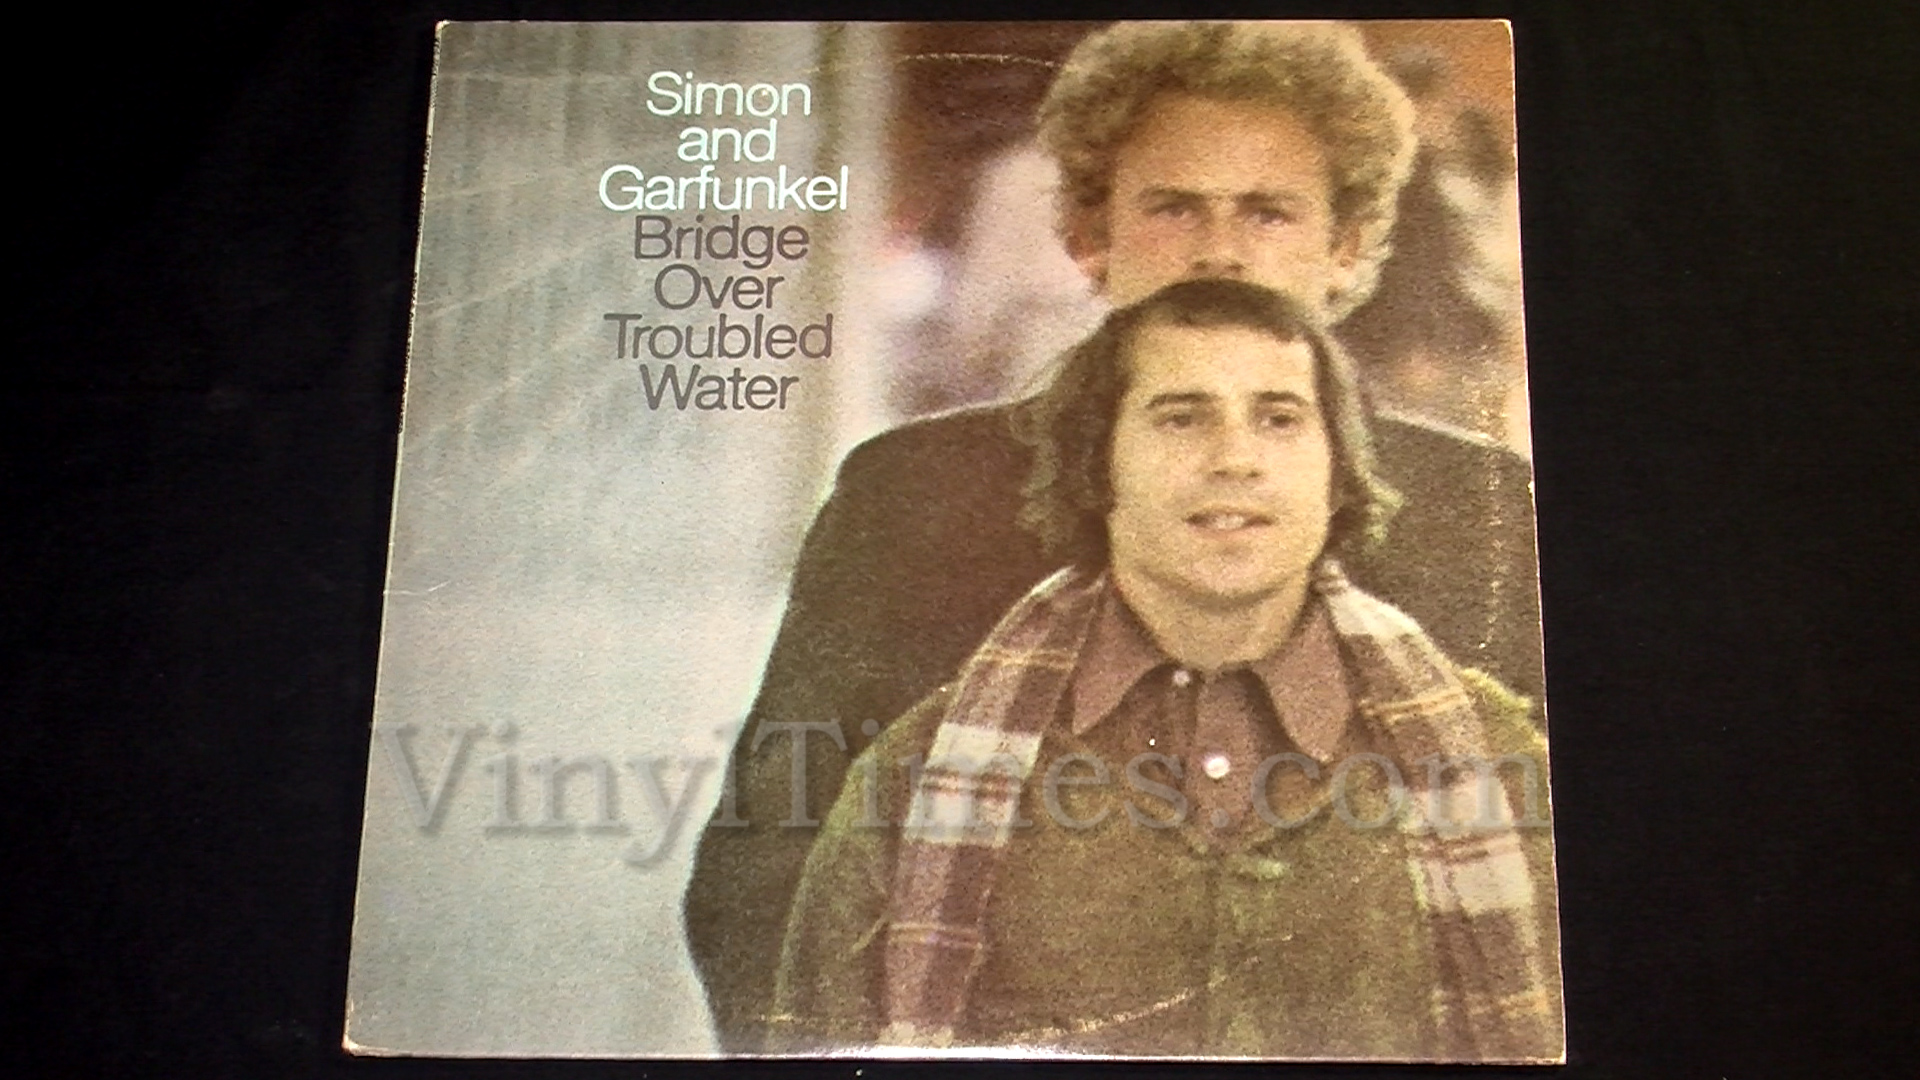 Simon & Garfunkel - "Bridge Over Troubled Water" Vinyl LP Record Album